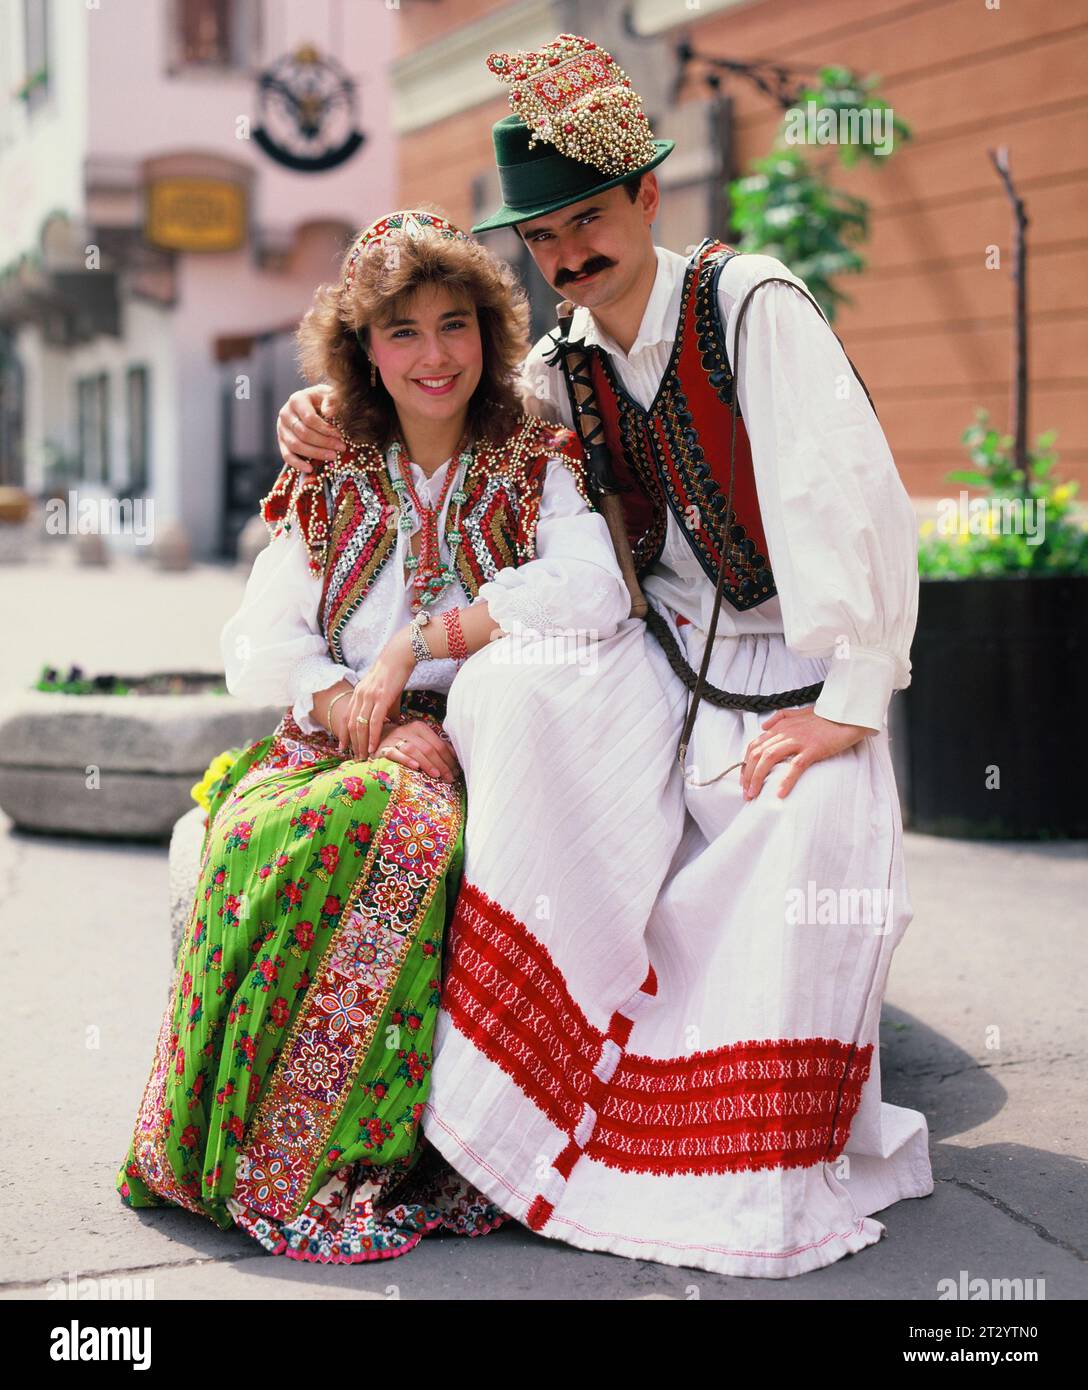 Carnaval húngaro fotografías e imágenes de alta resolución - Alamy